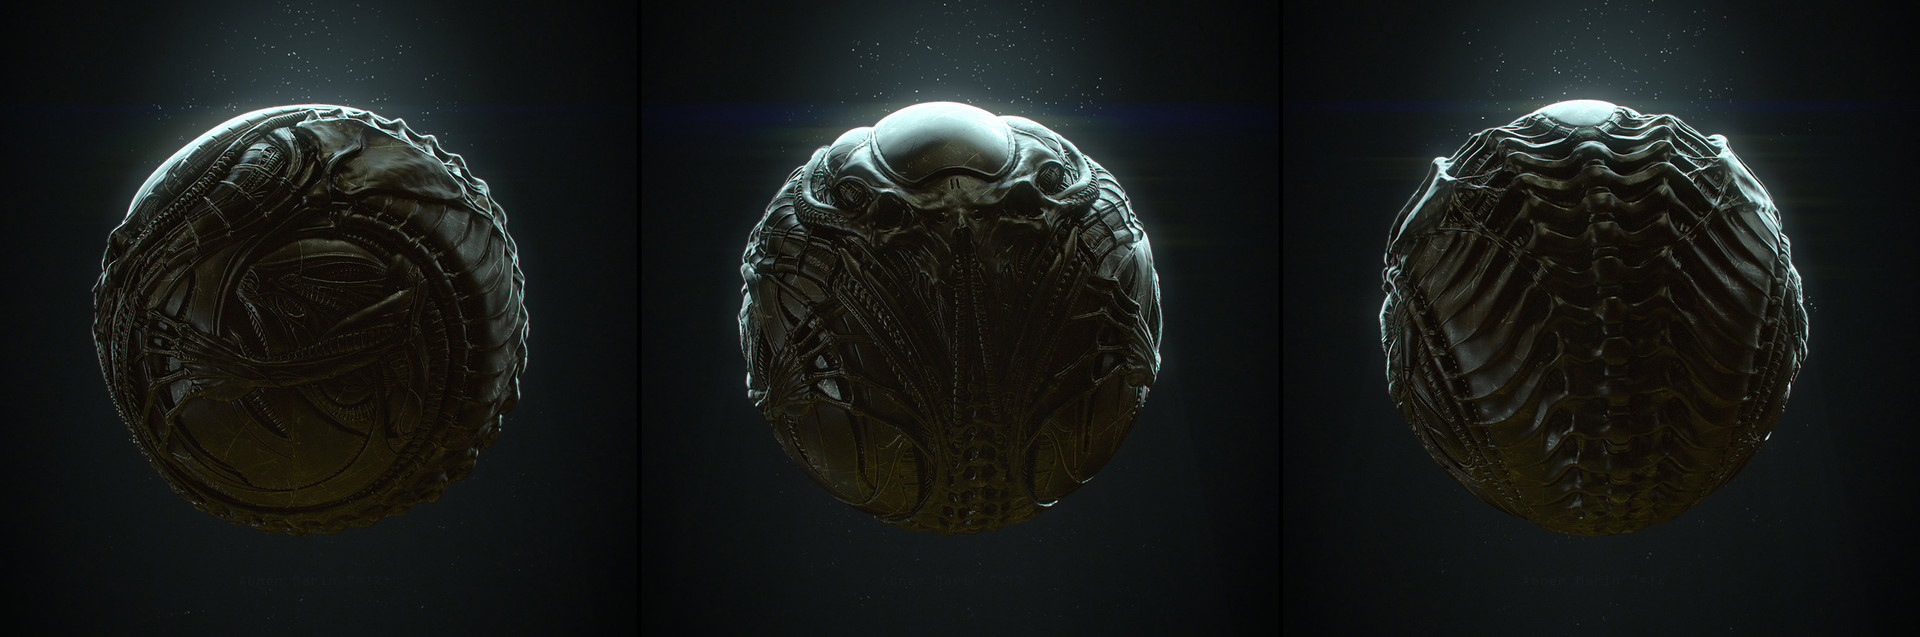 abner-marin-alienartifact-triptic-small.jpg